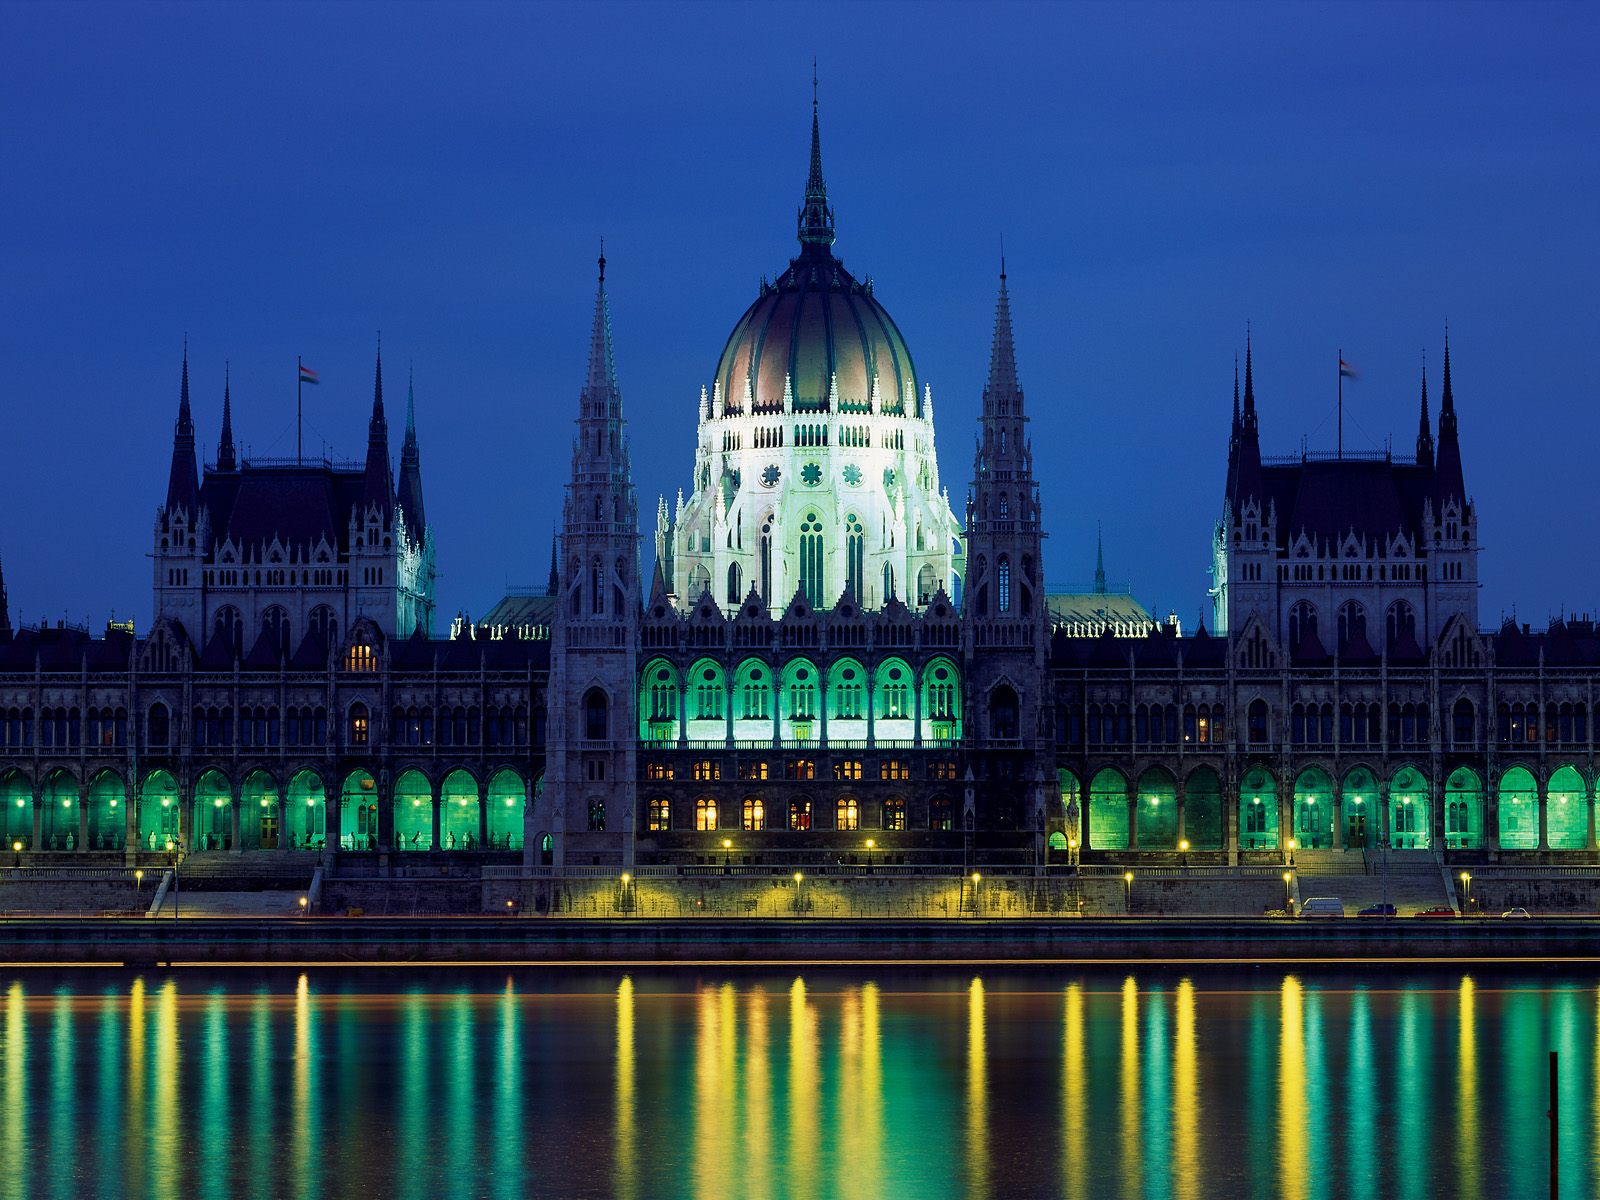 Hungarian Parliament Building lit up at night